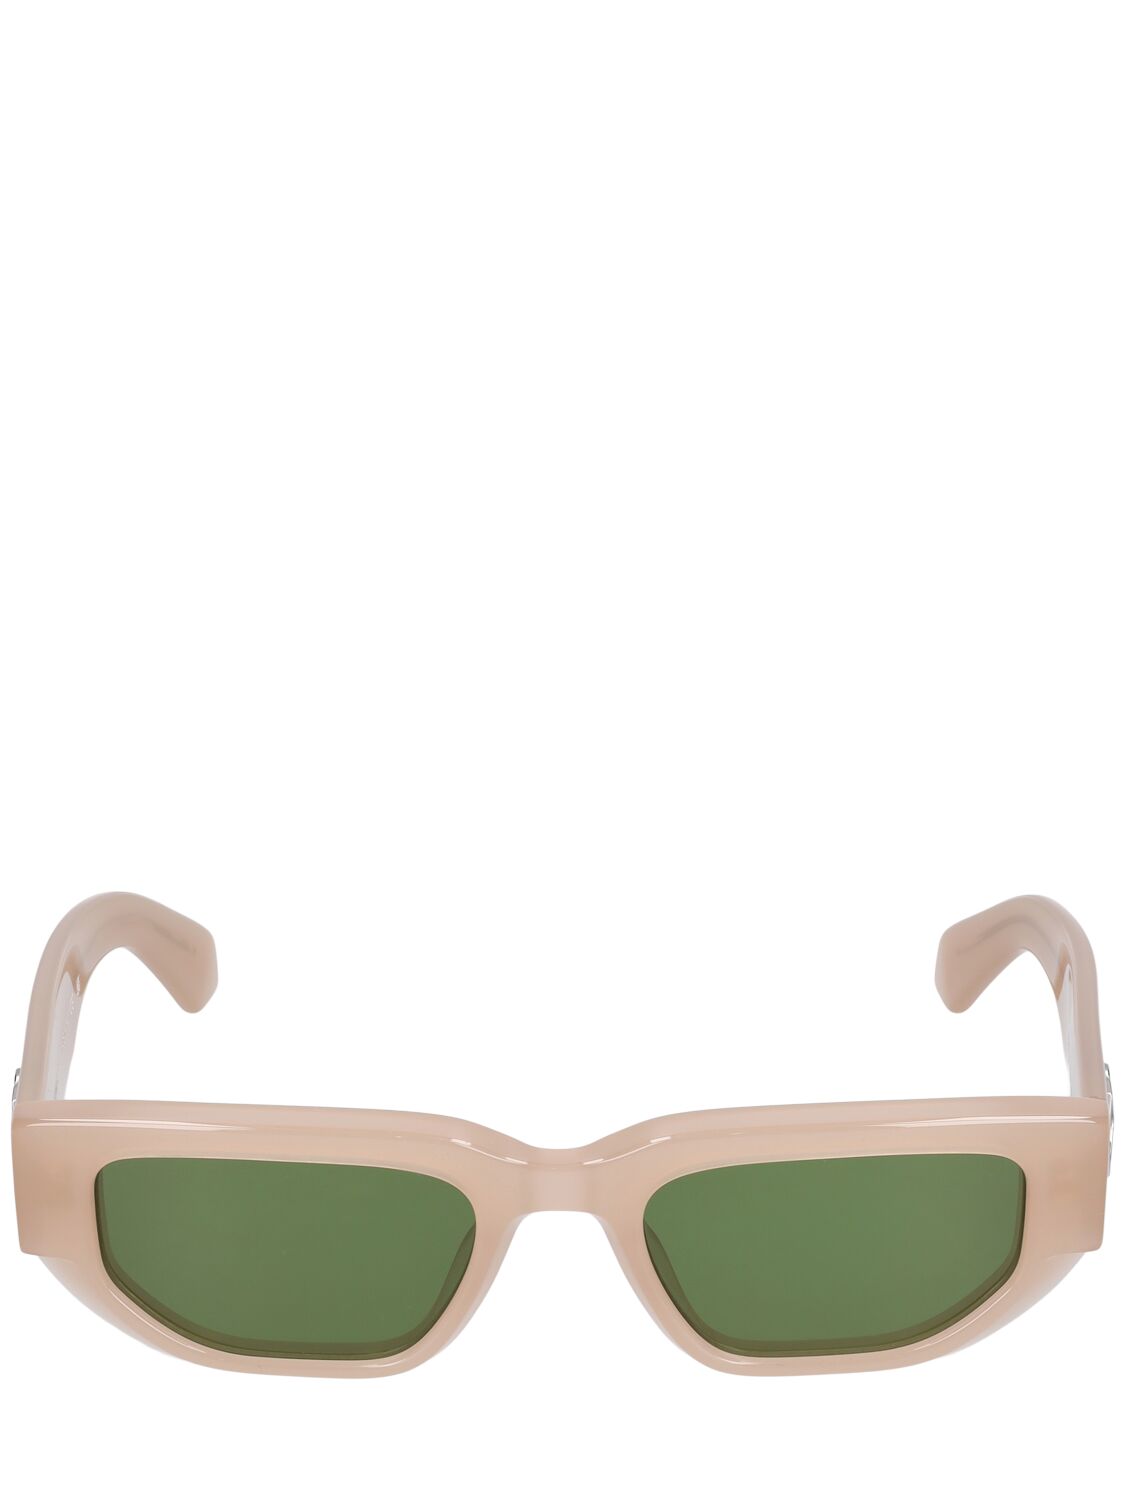 Image of Greeley Acetate Sunglasses